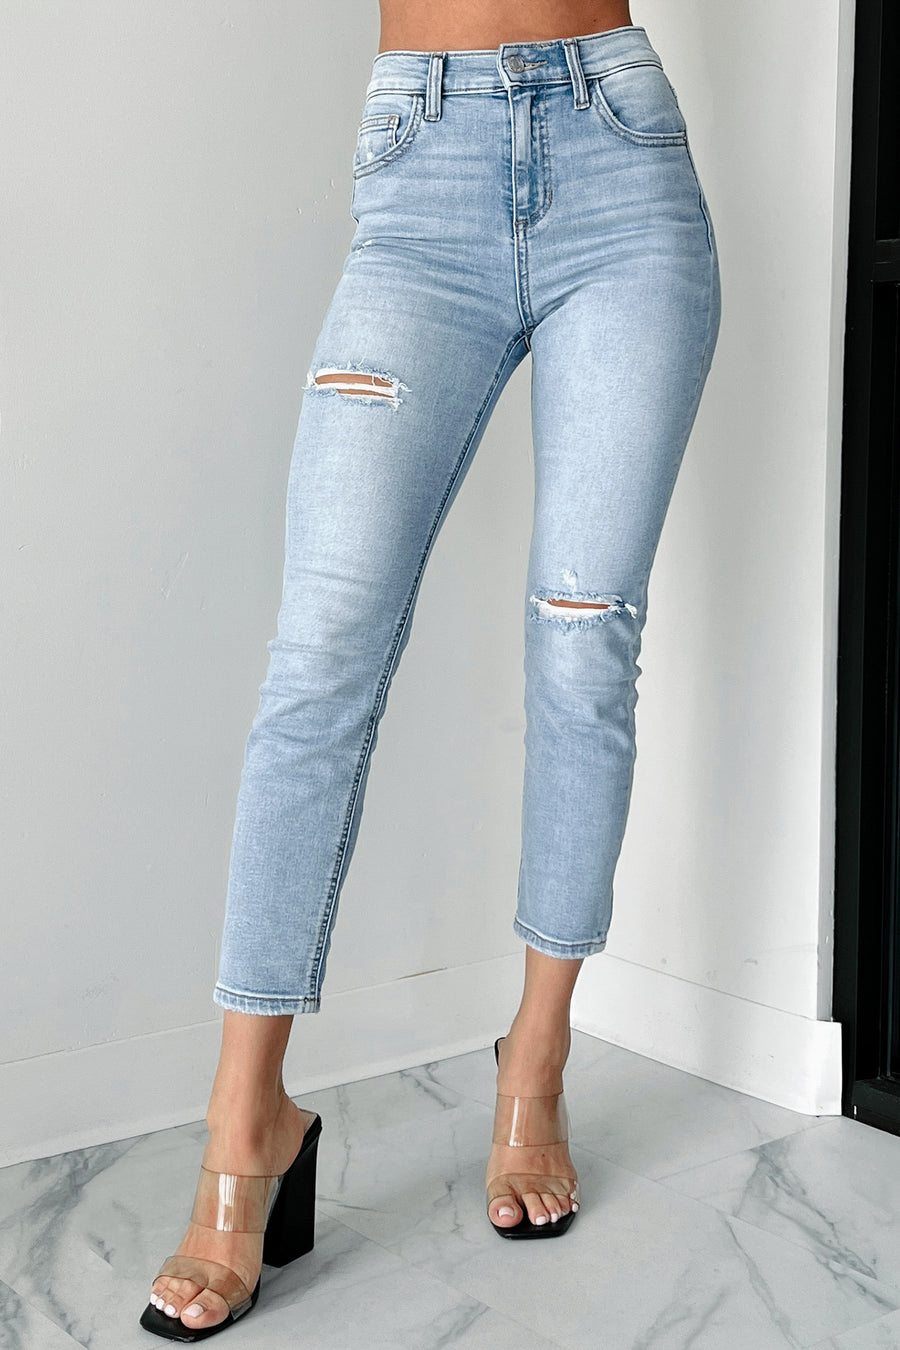 Darcy Sneak Peek High Rise Crop Skinny Jeans (Light Wash) - NanaMacs